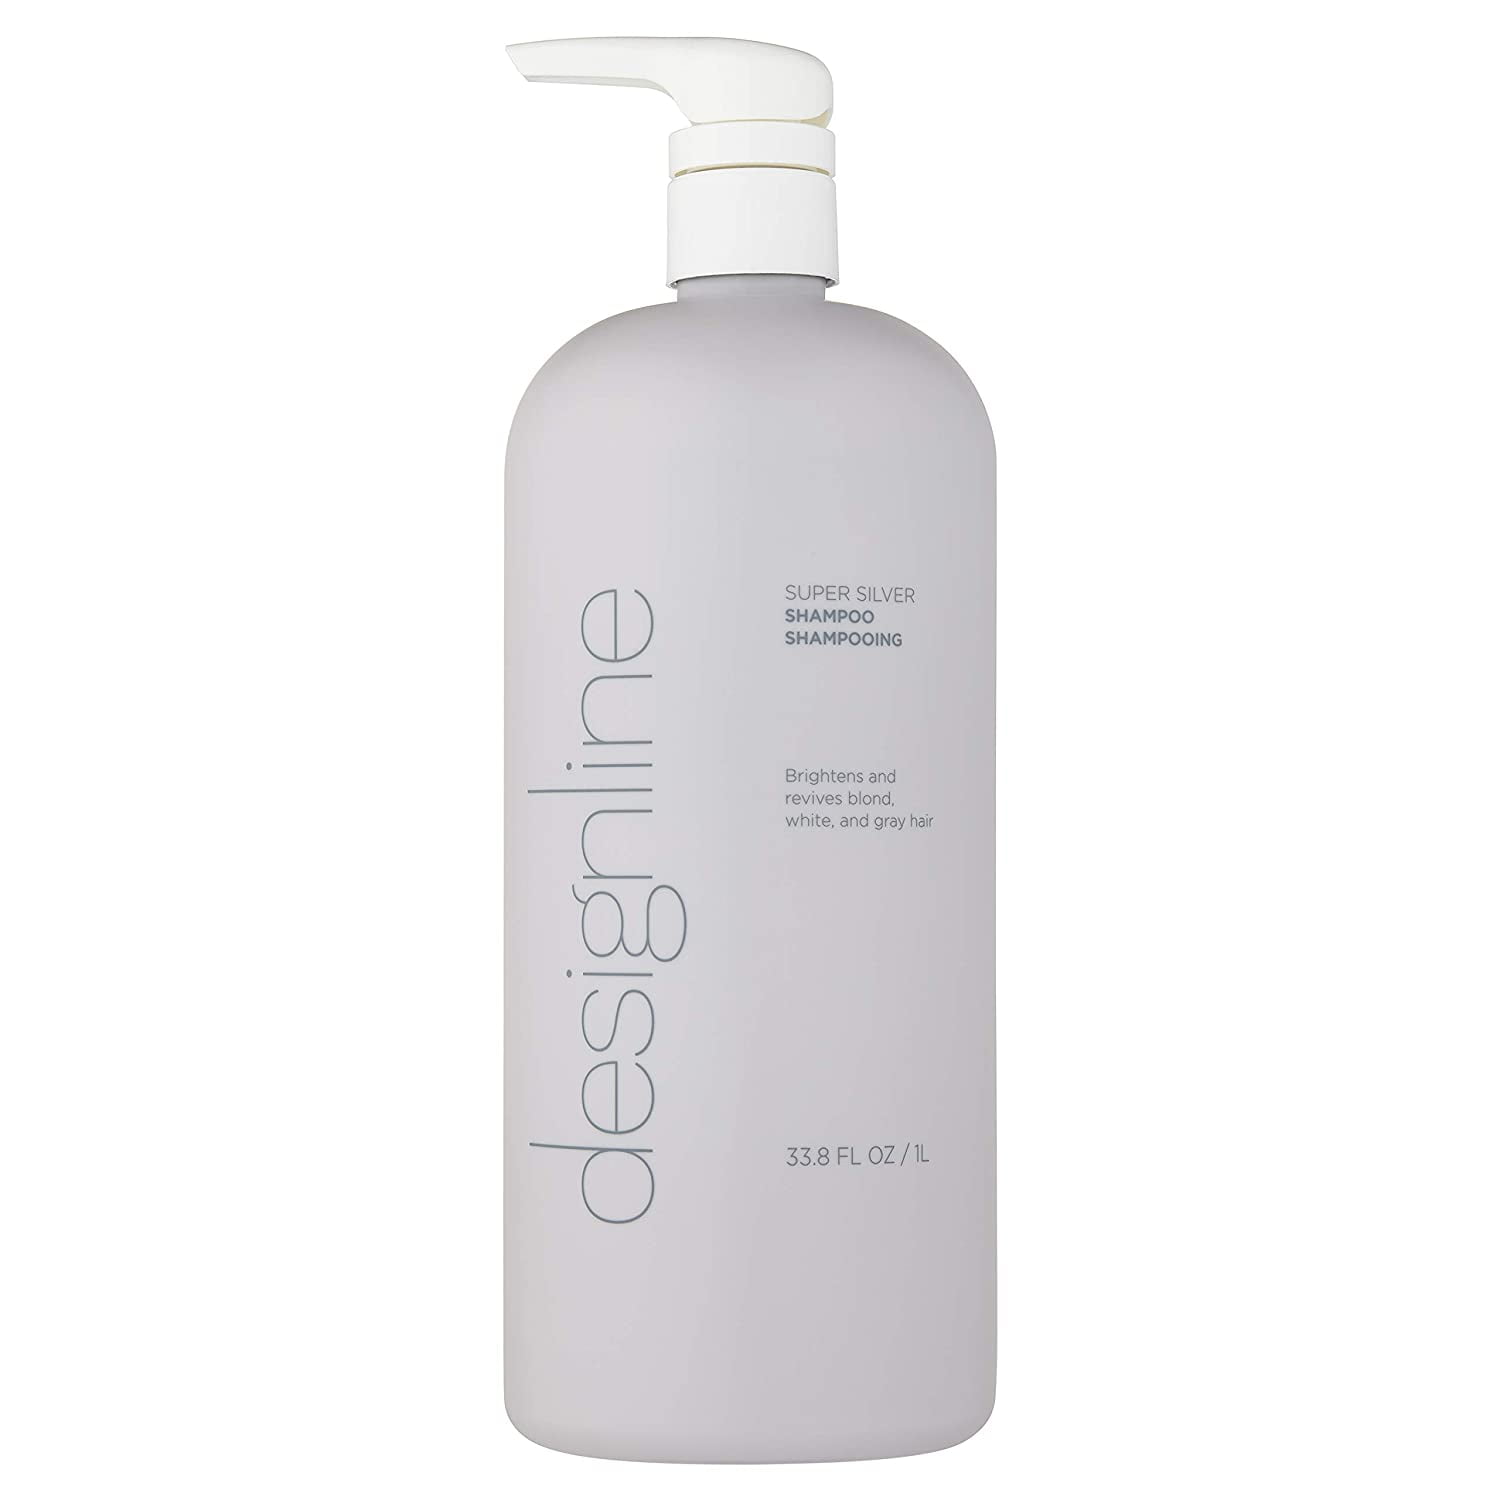 Super Silver Shampoo - Regis DESIGNLINE - Restores Moisture, Boost Color for Blonde, Grey, White Hair, Strengthens and Improves Elasticity to Prevent Color Fade (33.8 oz.)